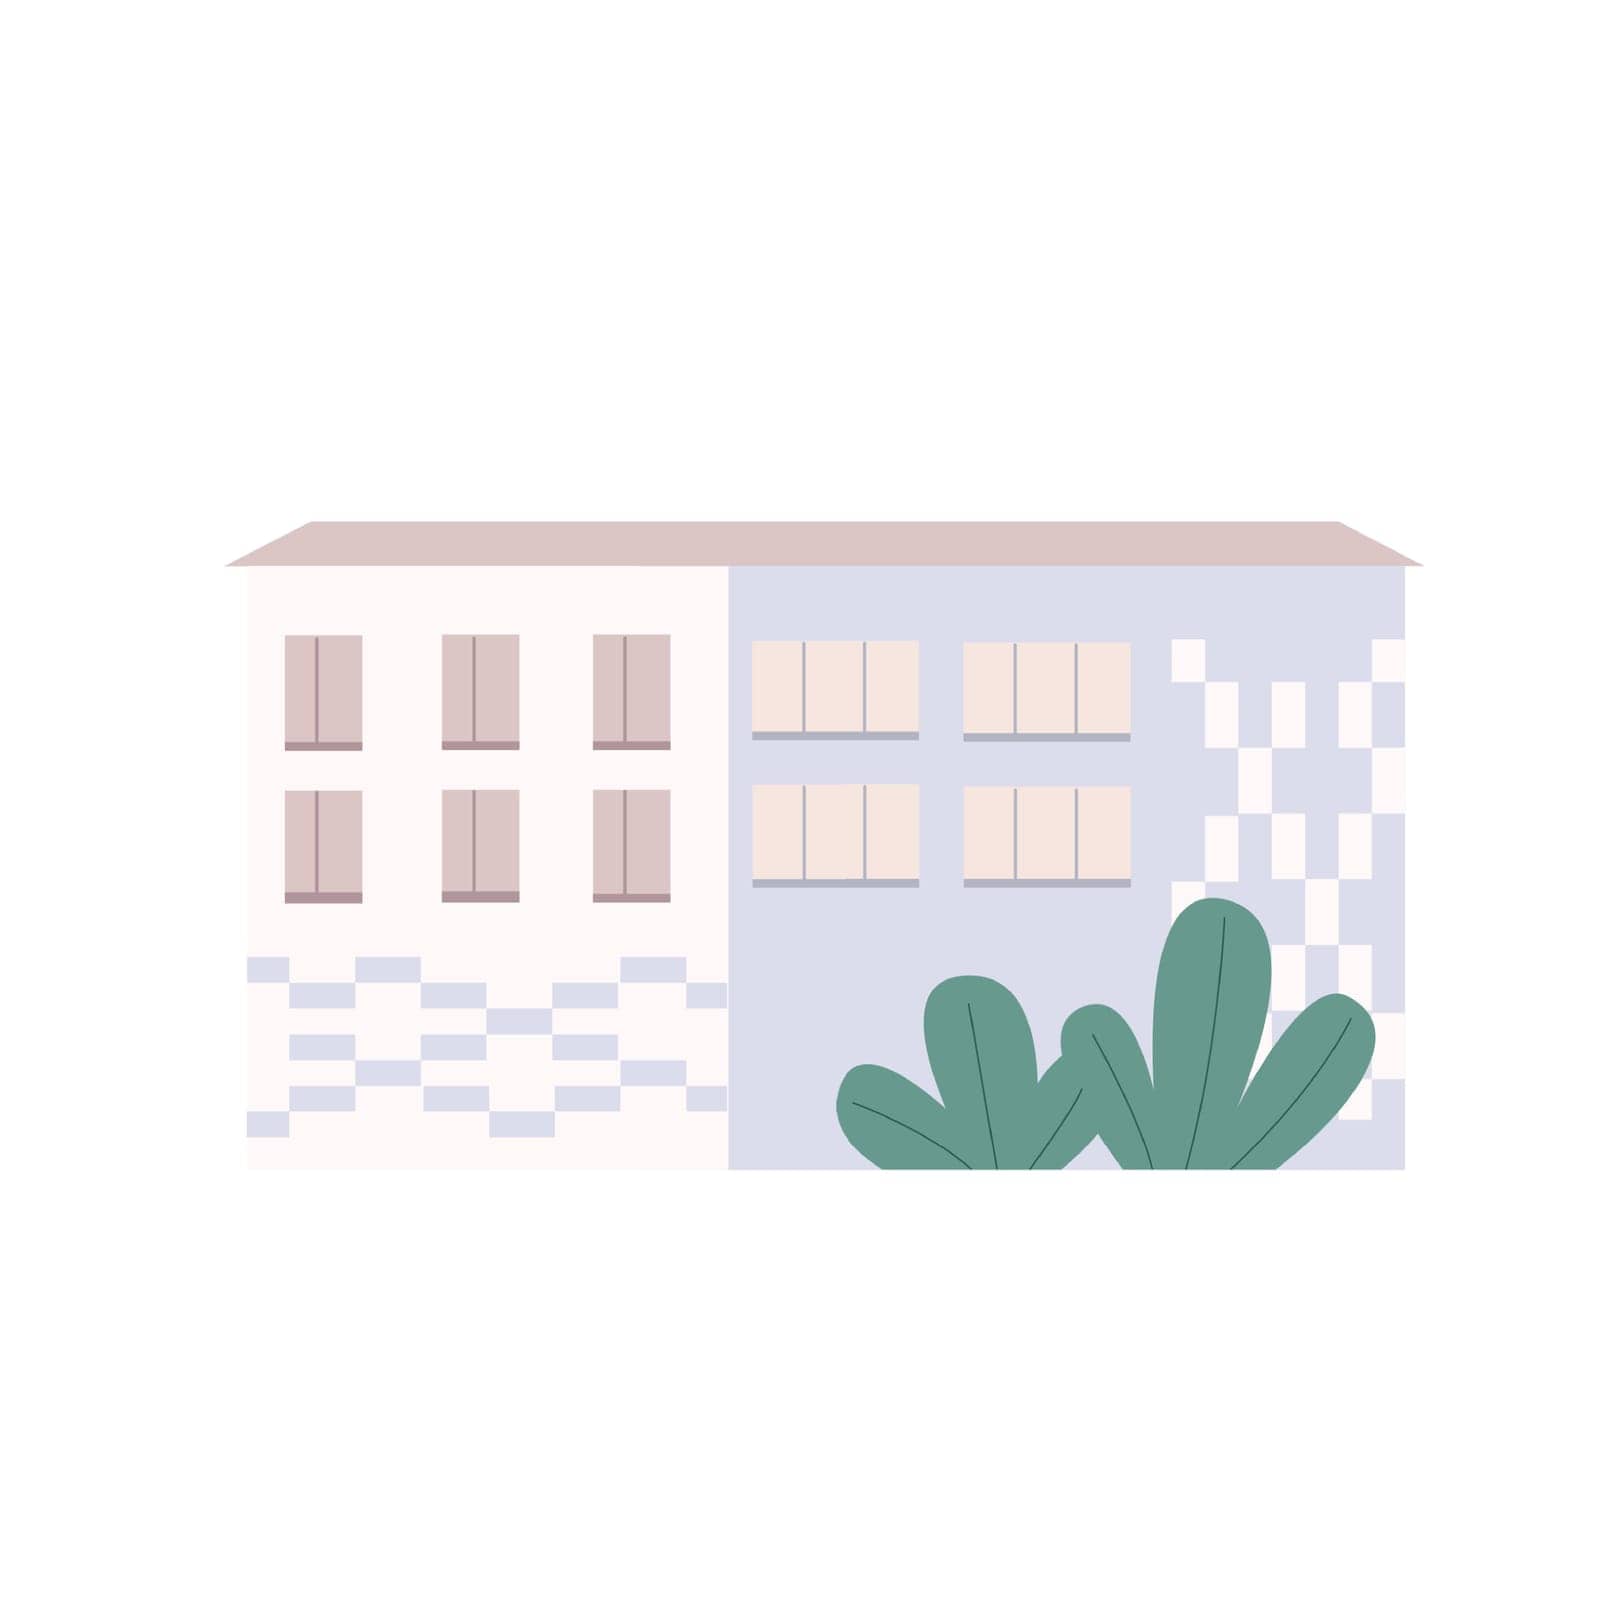 House location of the city street. Flat cartoon vector illustration.